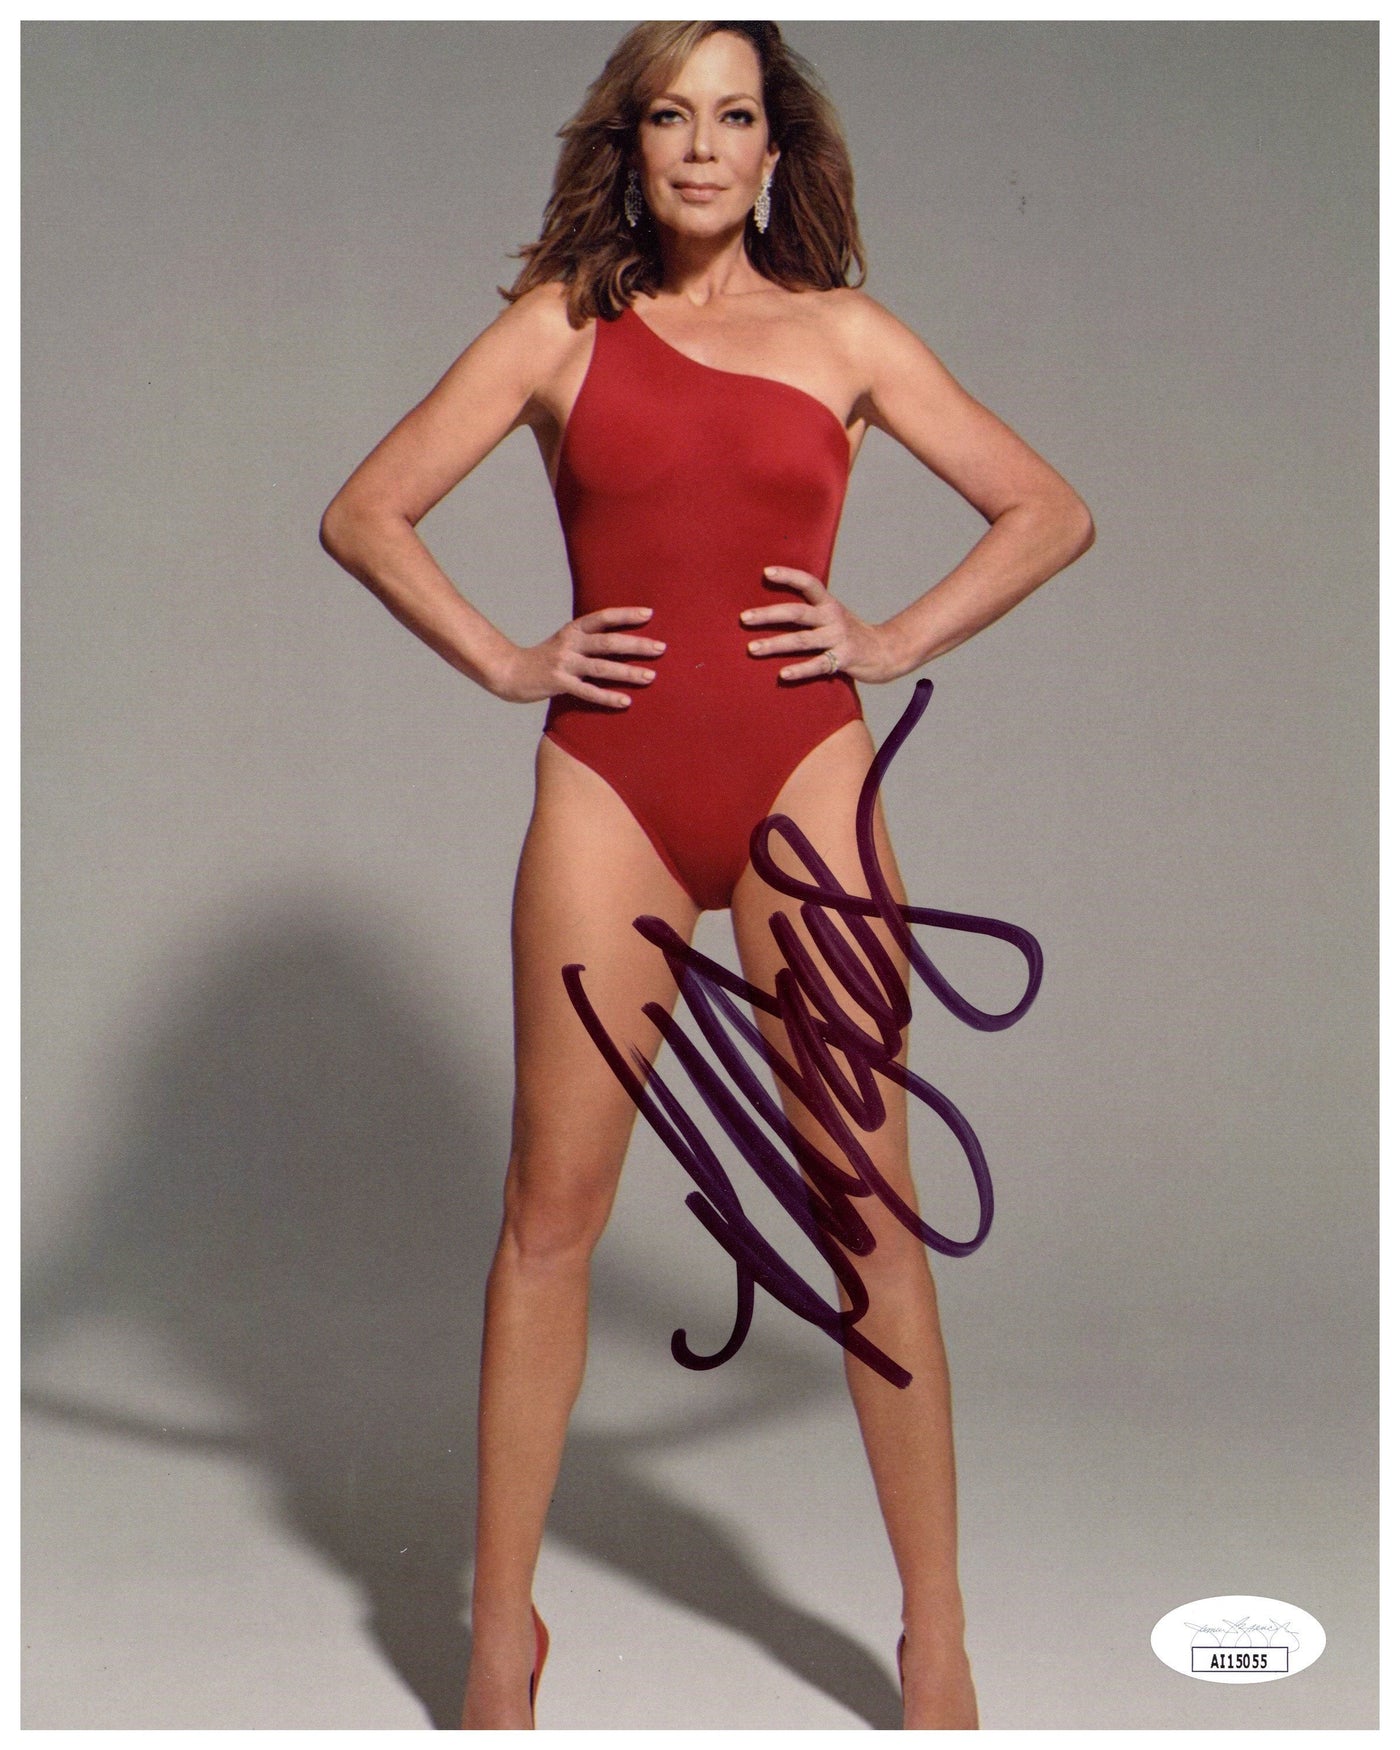 Allison Janney Signed 8x10 Photograph West Wing Star Autographed JSA COA